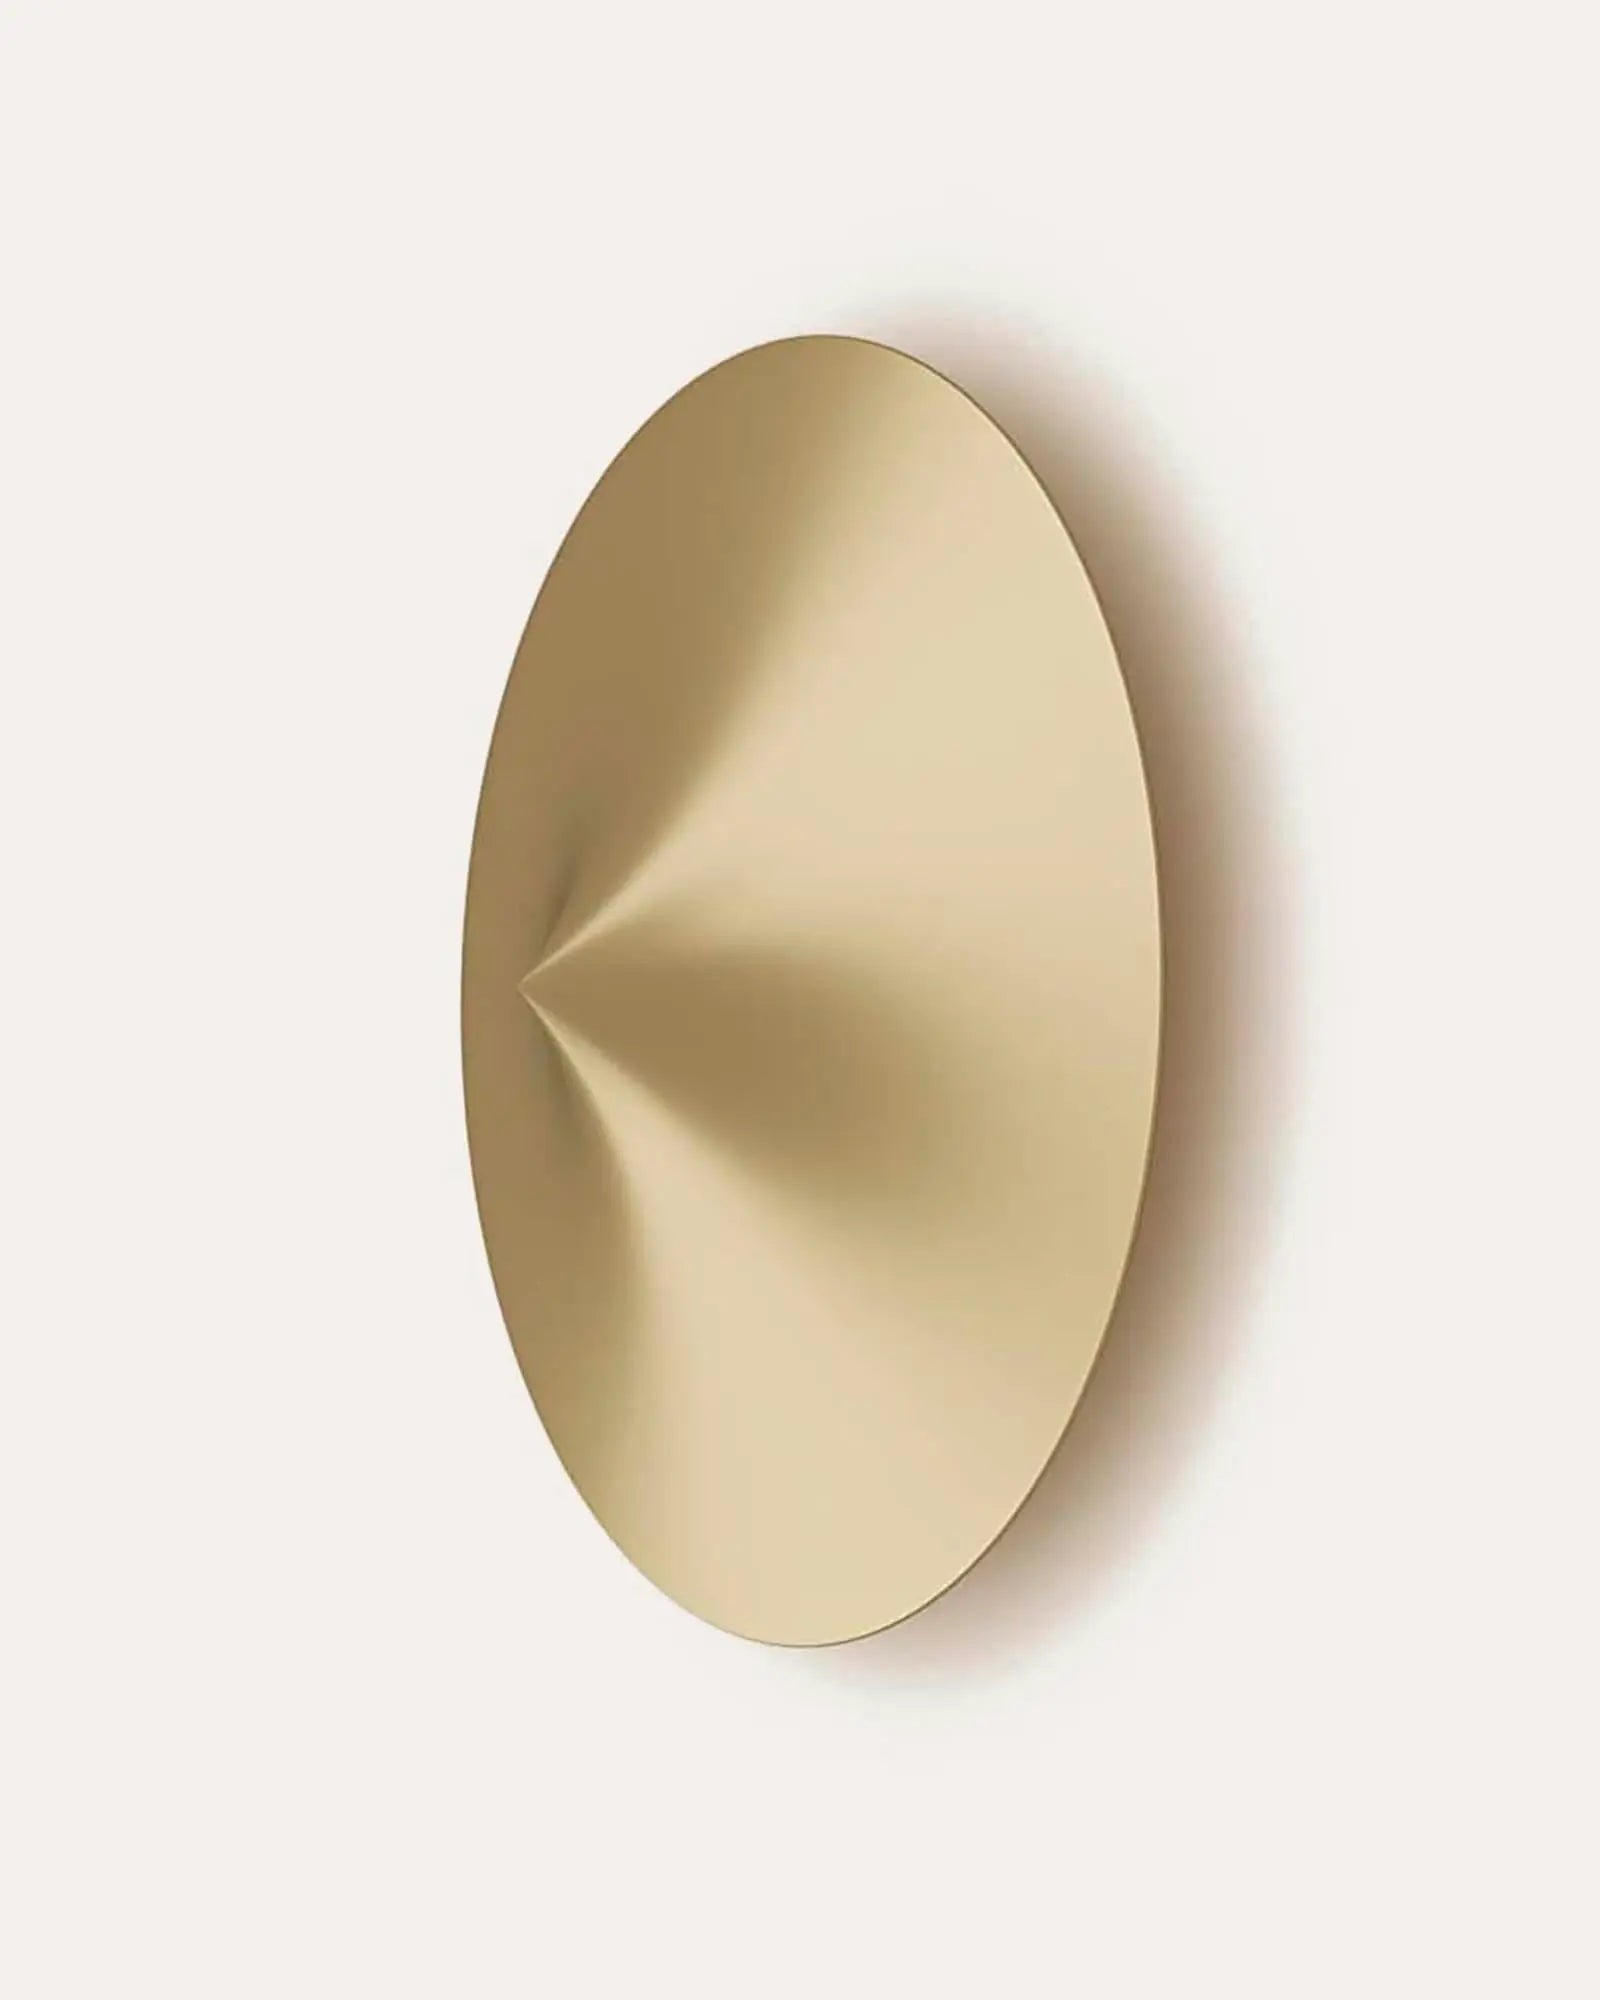 Hat wall light contemporary oriental inspire wall light brass